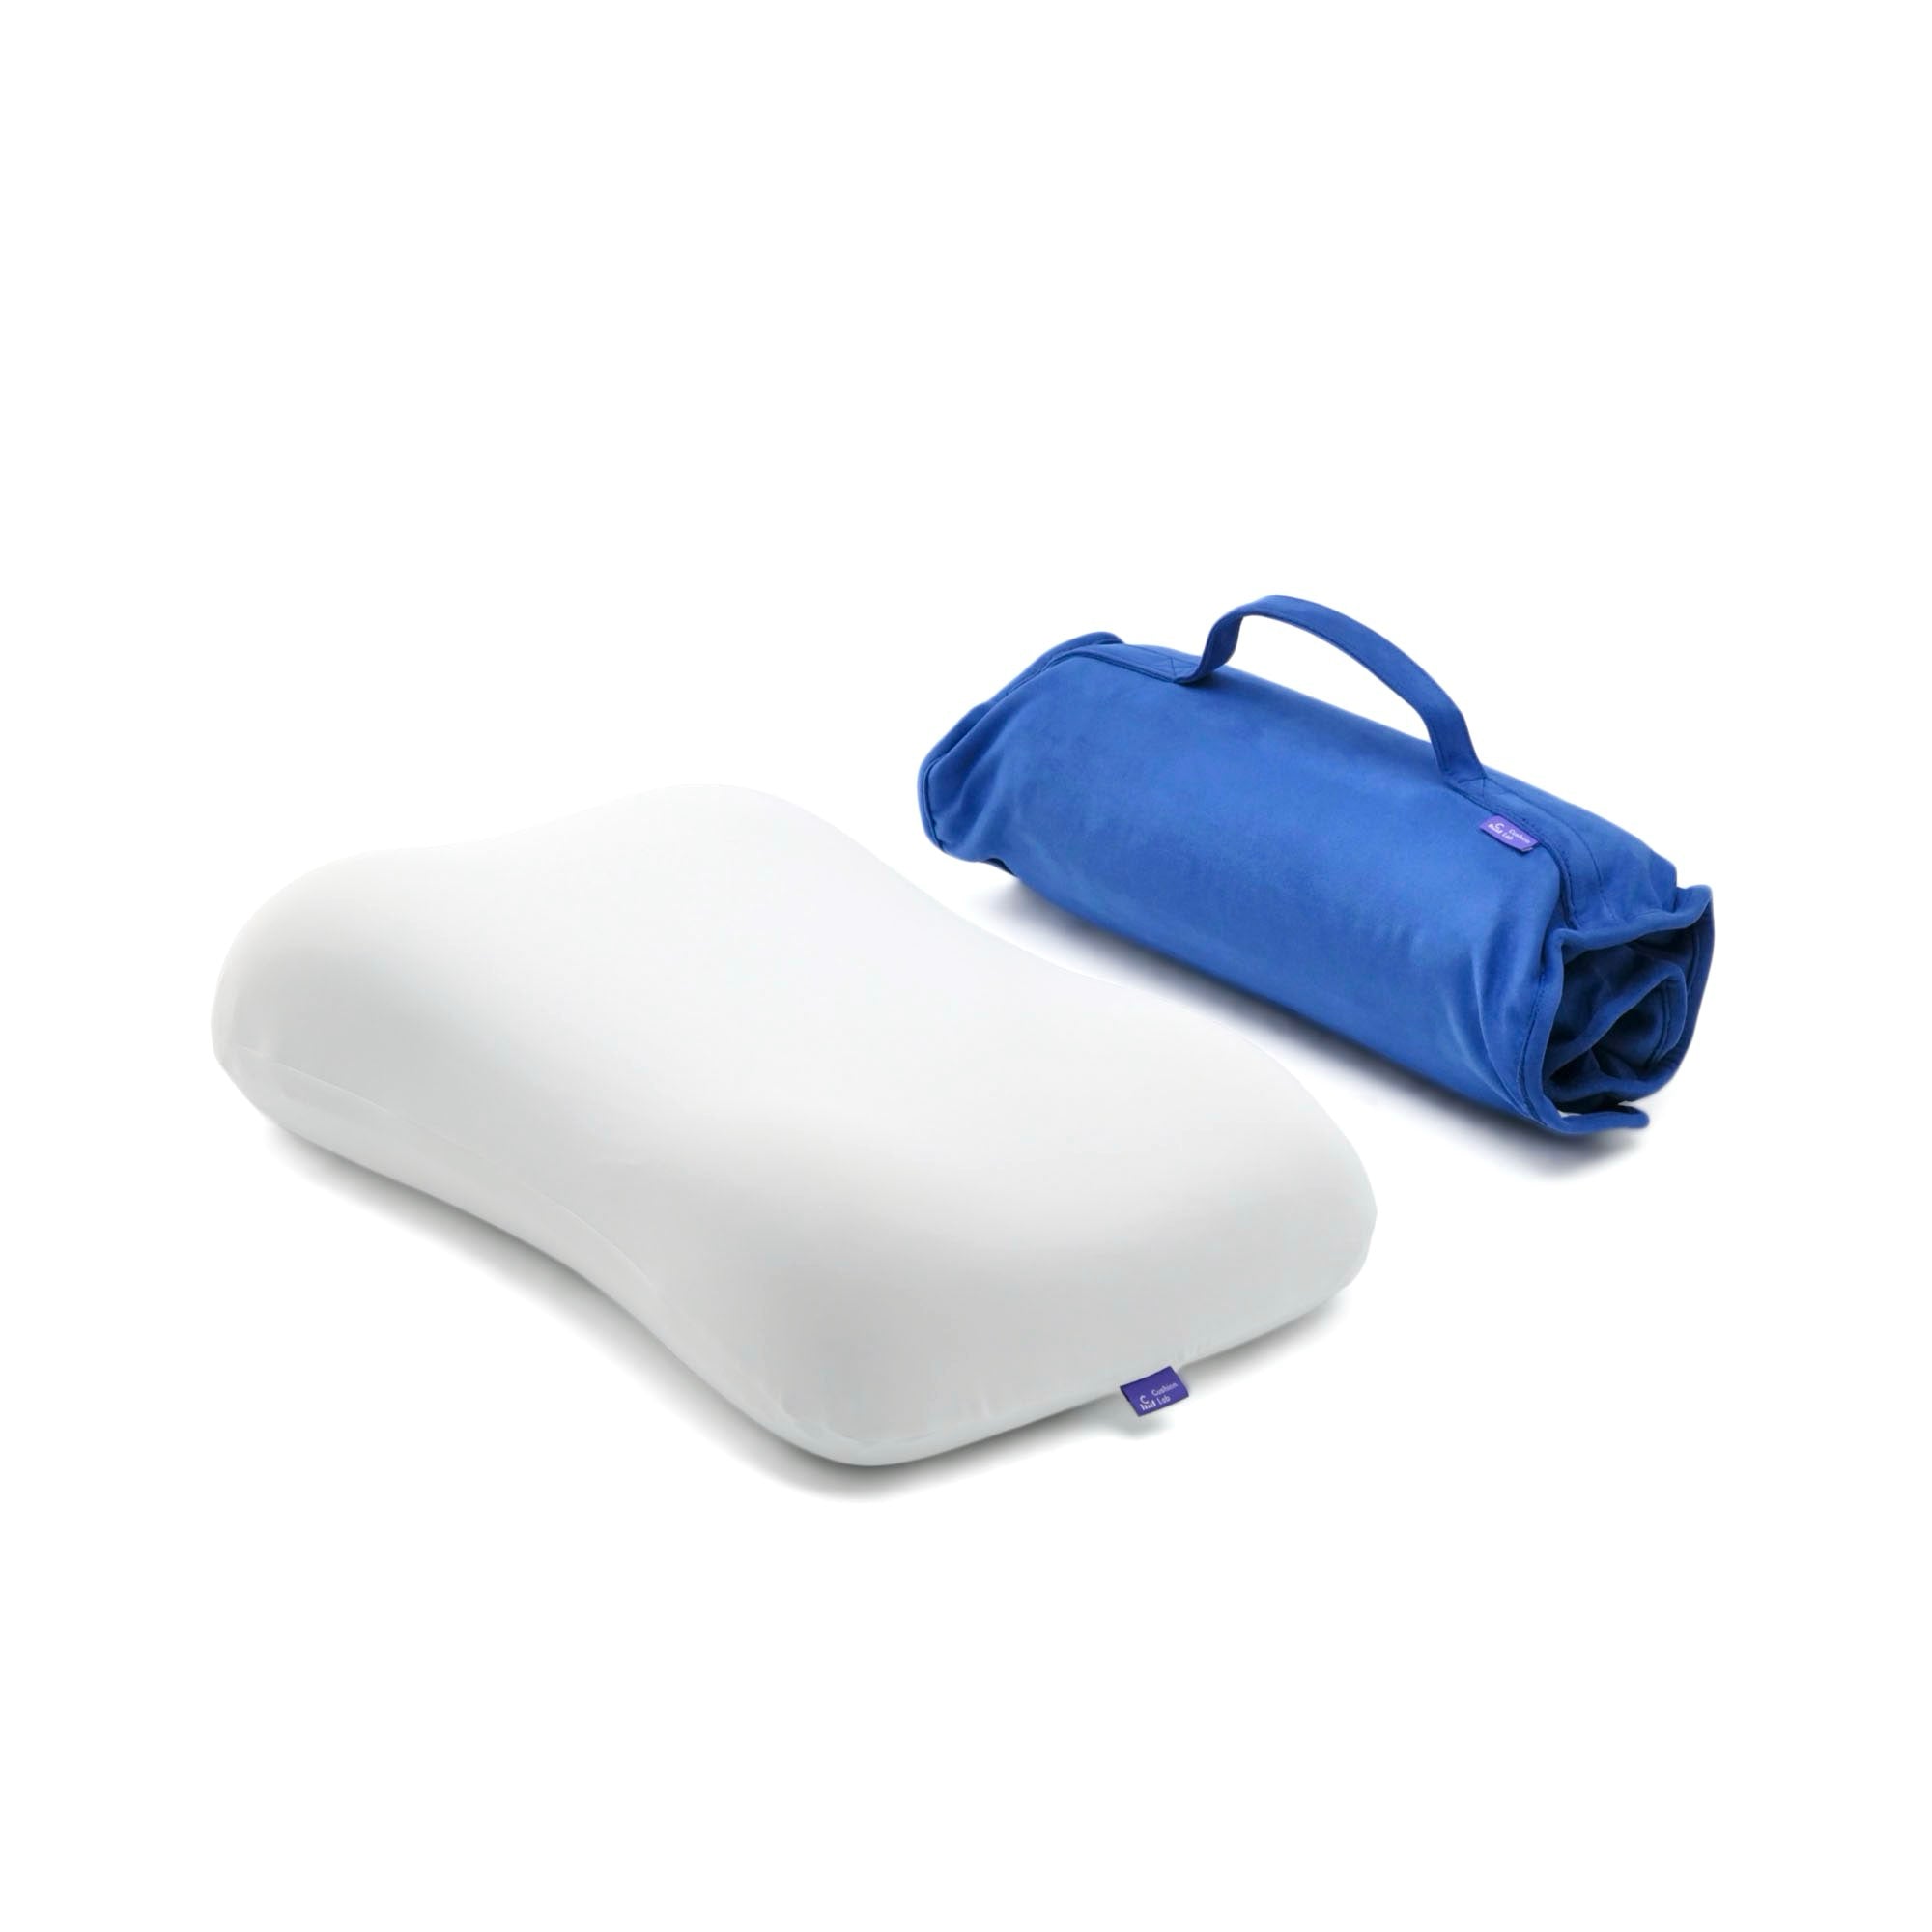 NEW LOWER PRICE Go Travel: pair of memory foam travel/neck pillows